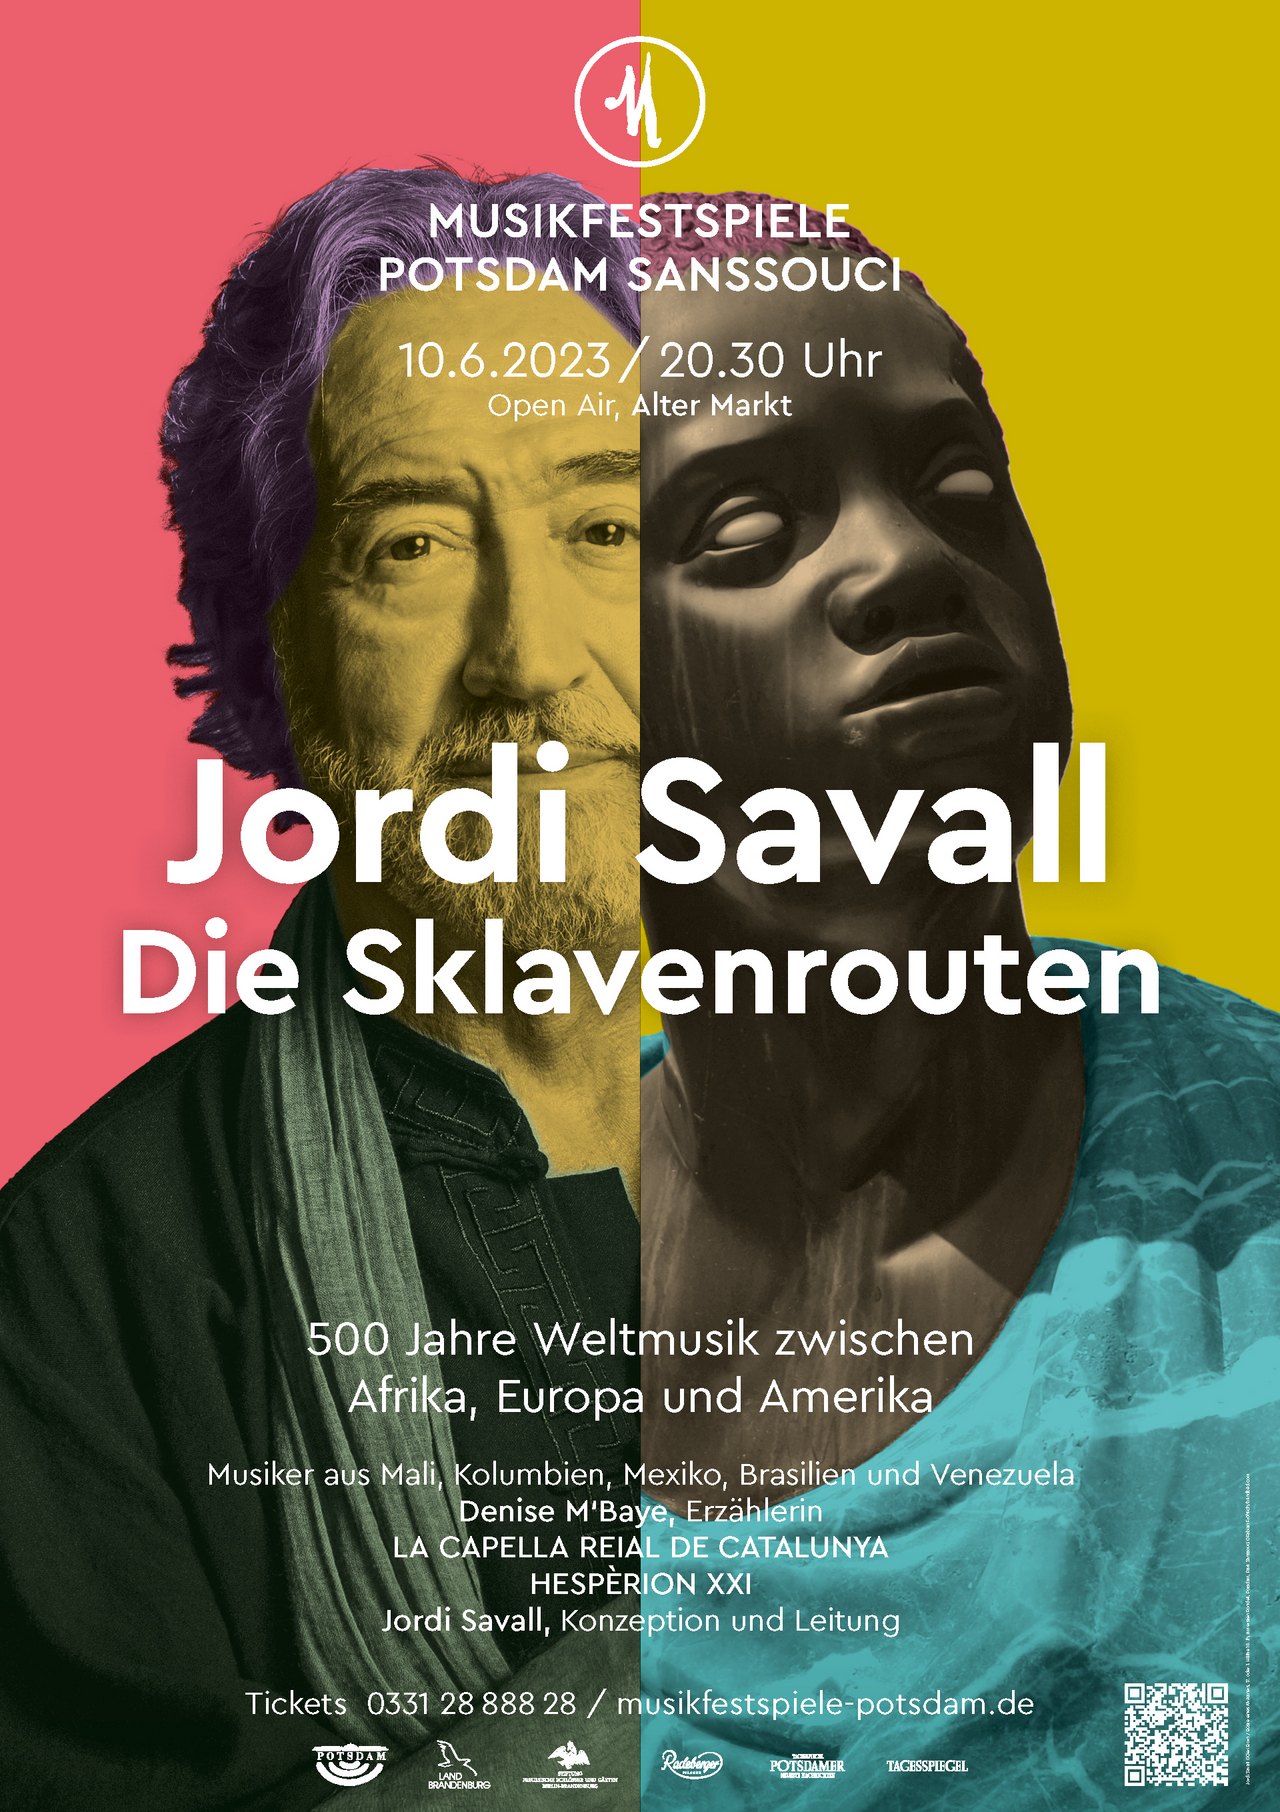 Jordi Savall ©Geri Born / Büste eines Afrikaners, 17. oder 1. Hälfte 18. Jh, am ersten Rondell, Potsdam, Park Sanssouci ©Fabian Fröhlich/blindbild.com